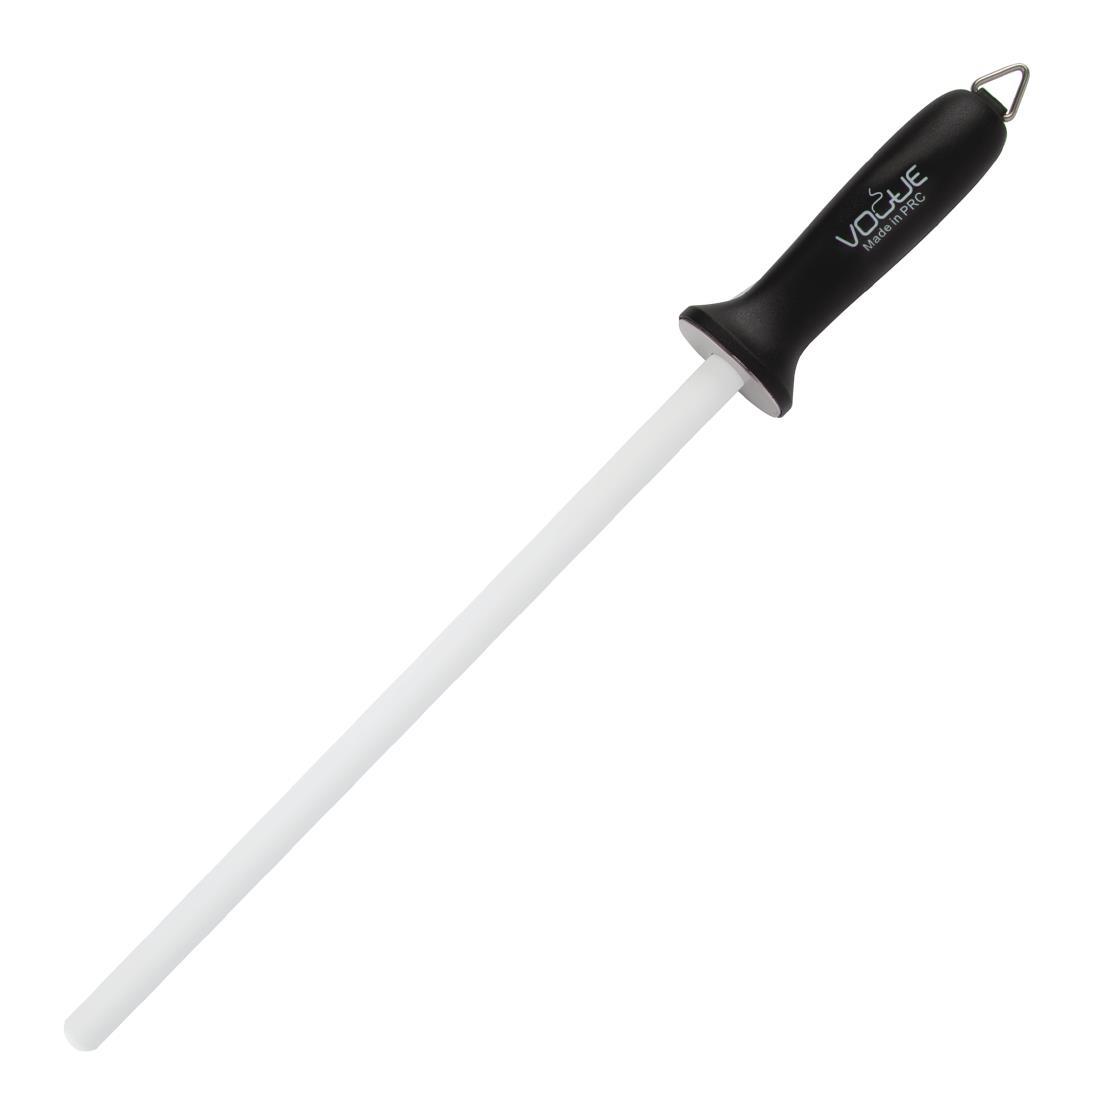 Vogue Ceramic Knife Sharpening Steel 30.5cm - GG002  - 1